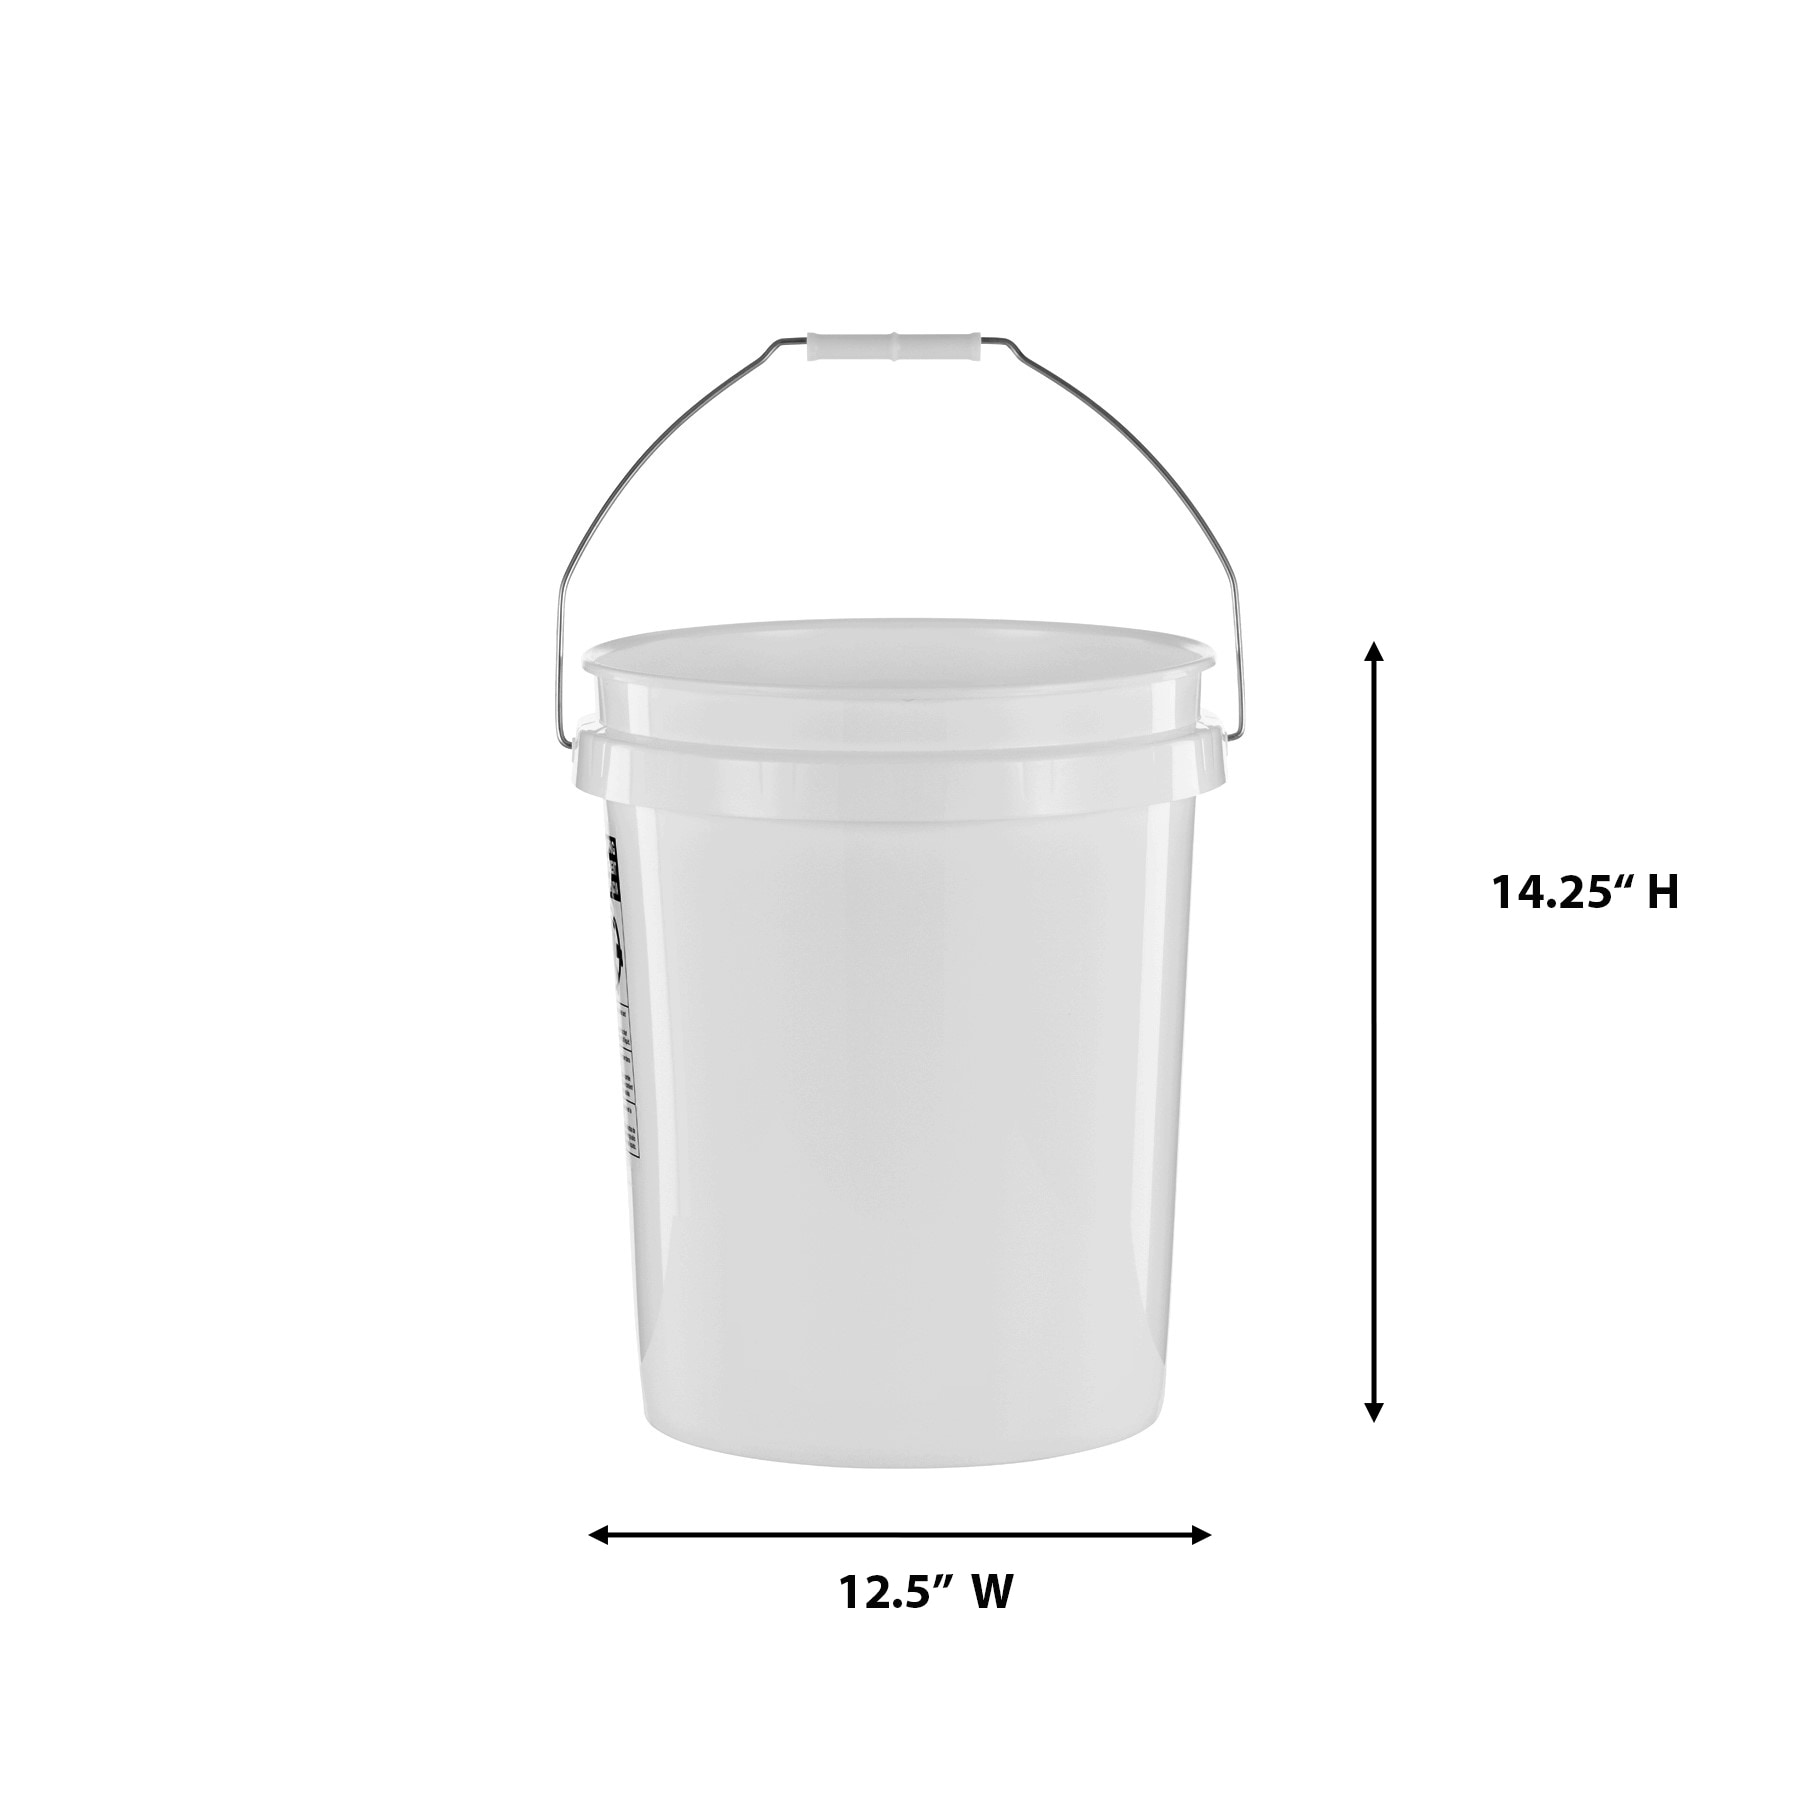 How Big Is A Gallon Bucket | tunersread.com